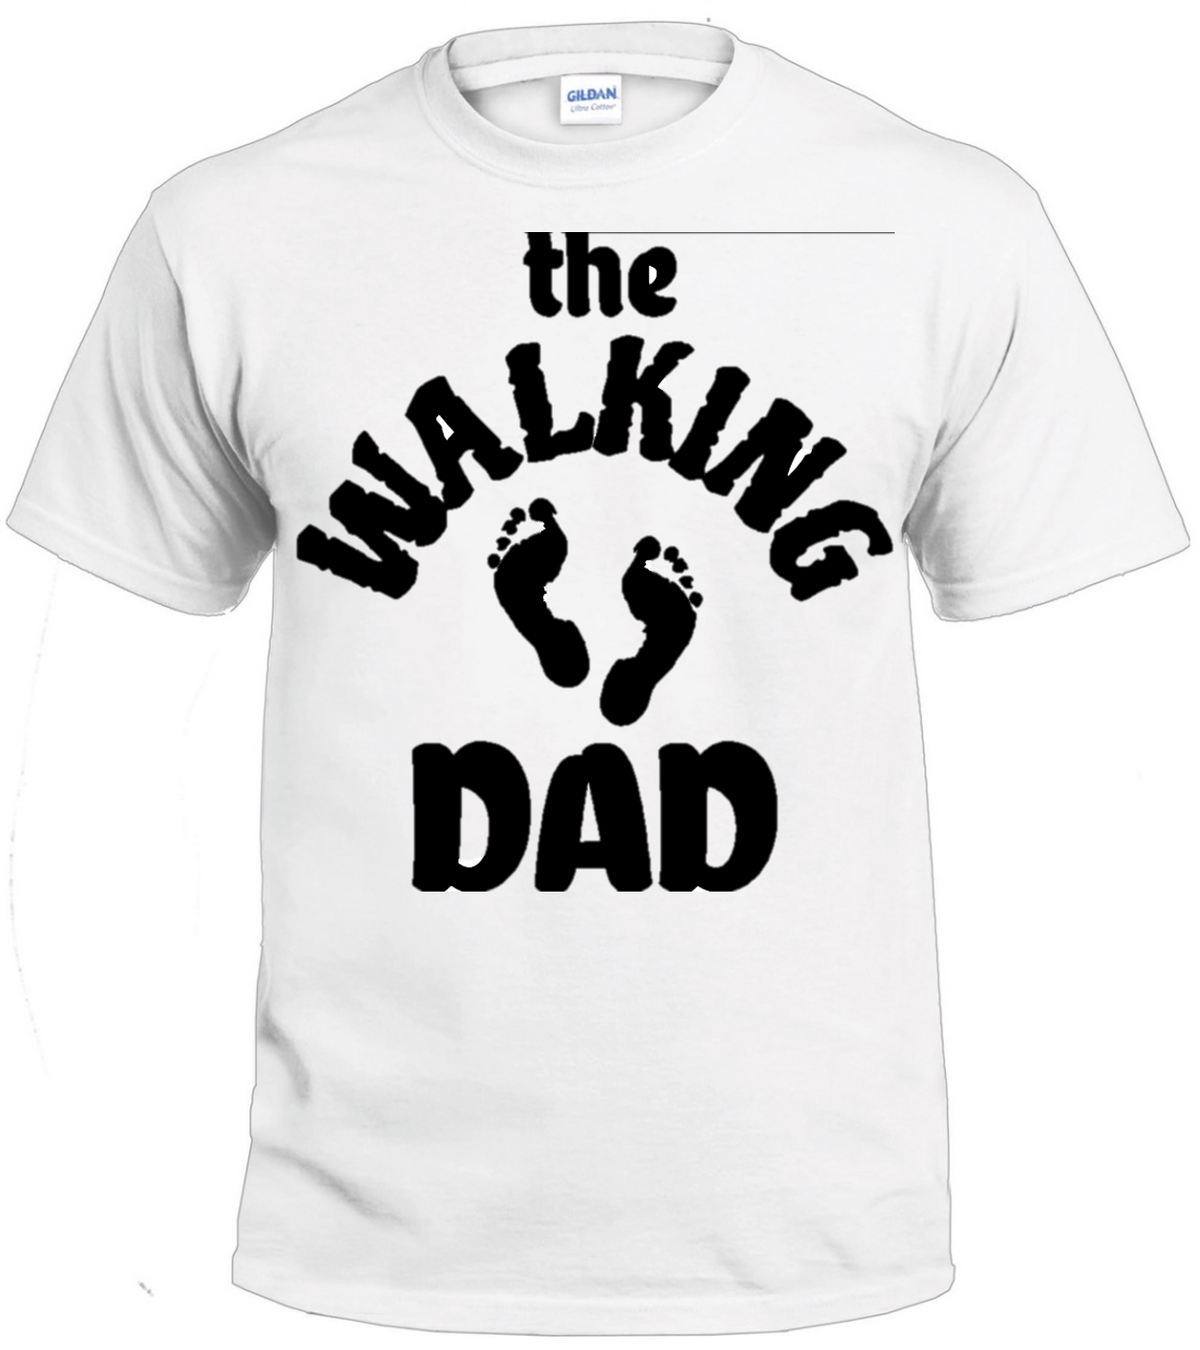 The Walking Dad t-shirt